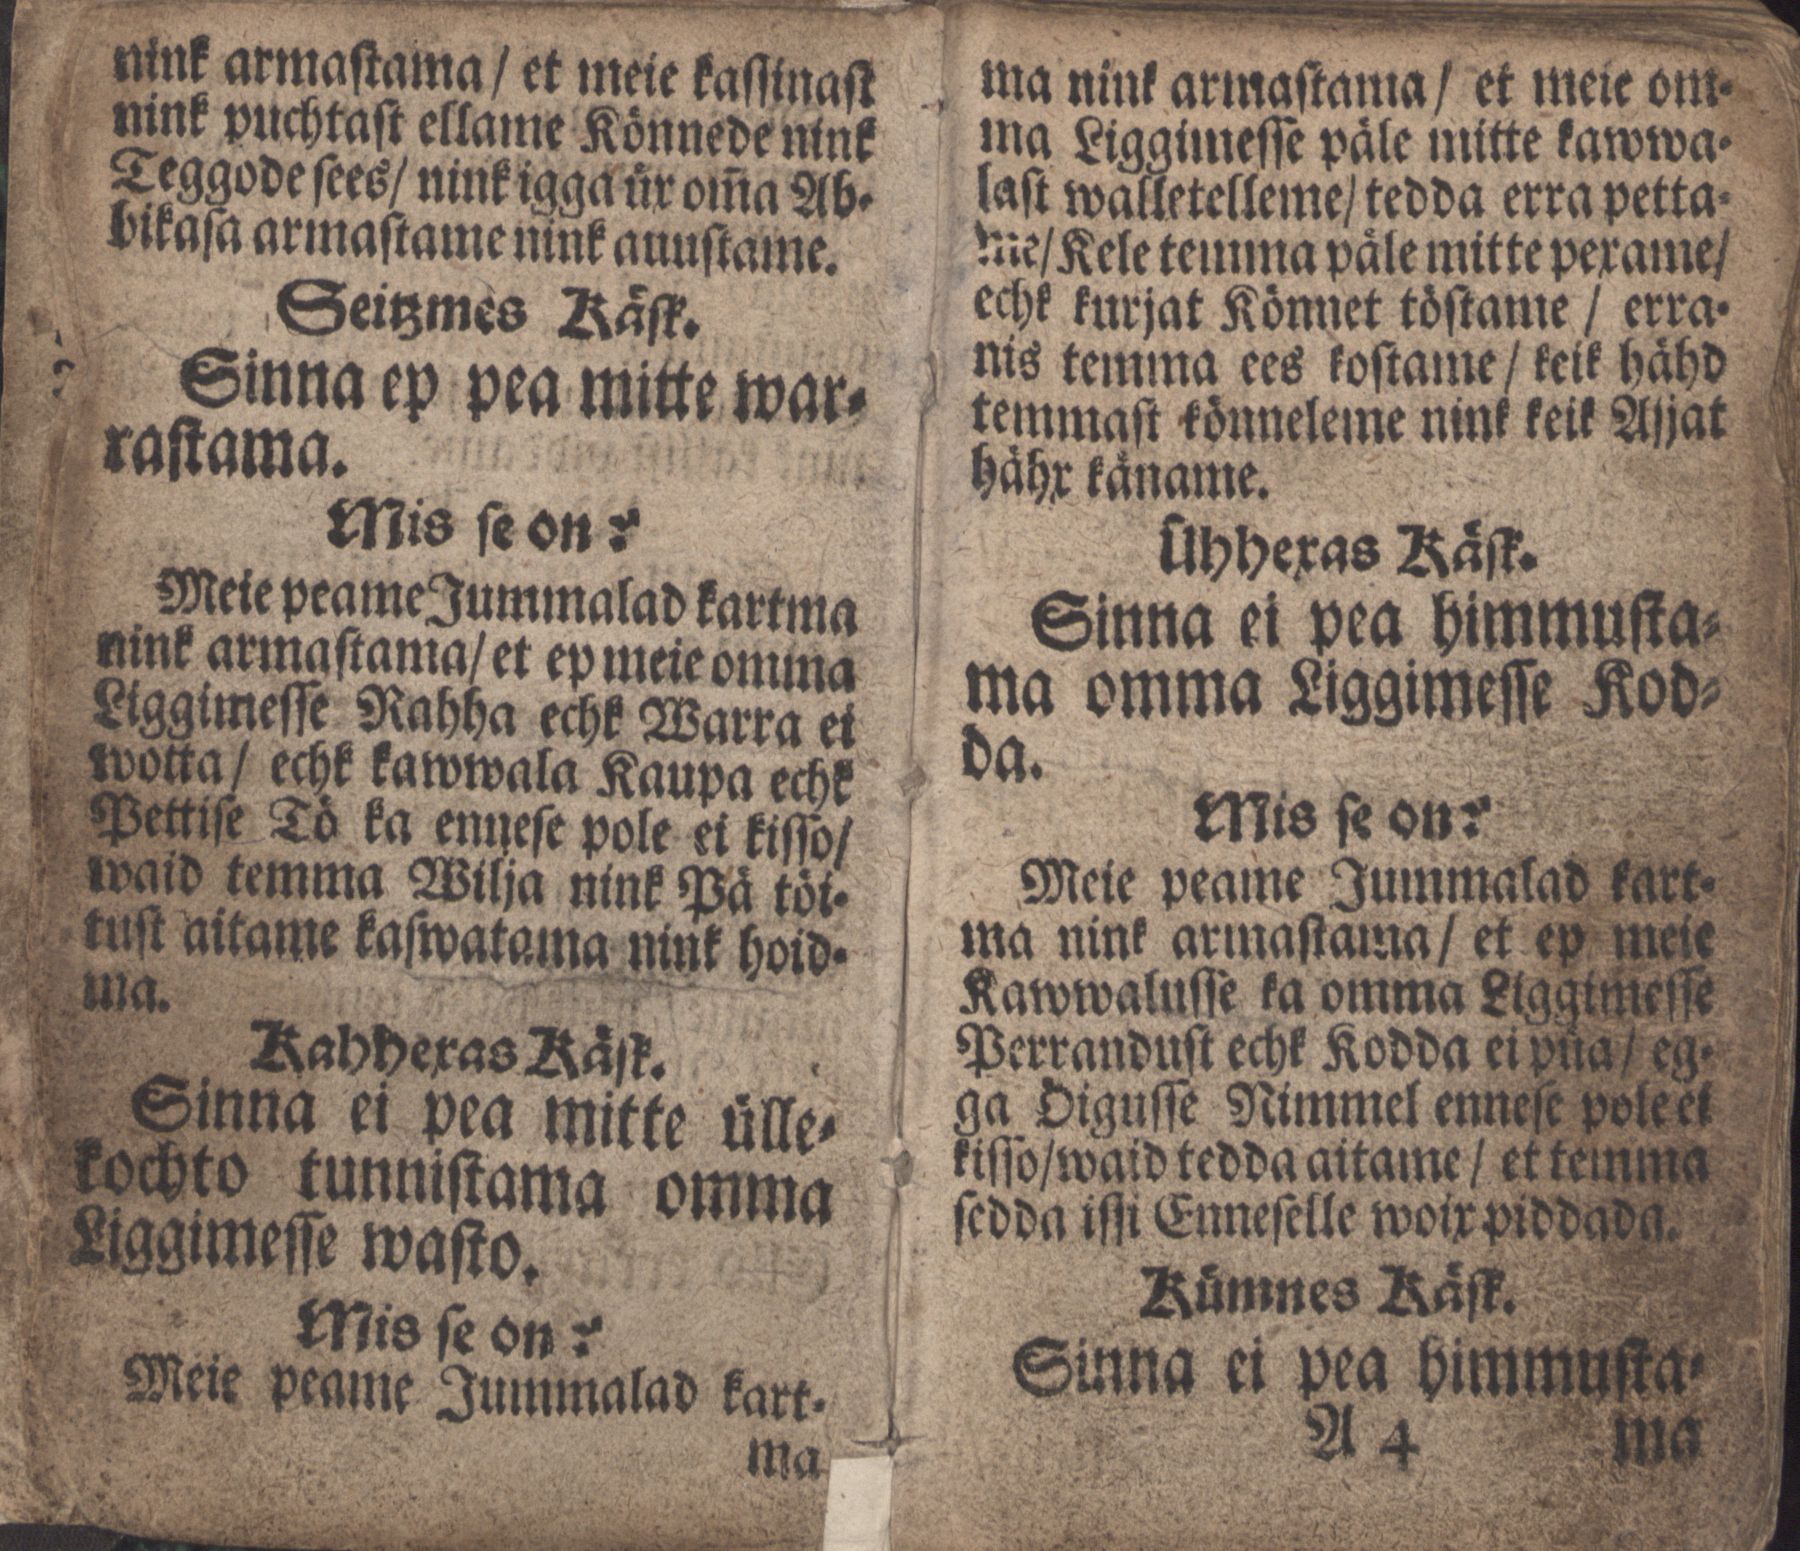 Ma Kele Koddo- nink Kirko-Ramat (1700) | 8. Main body of text